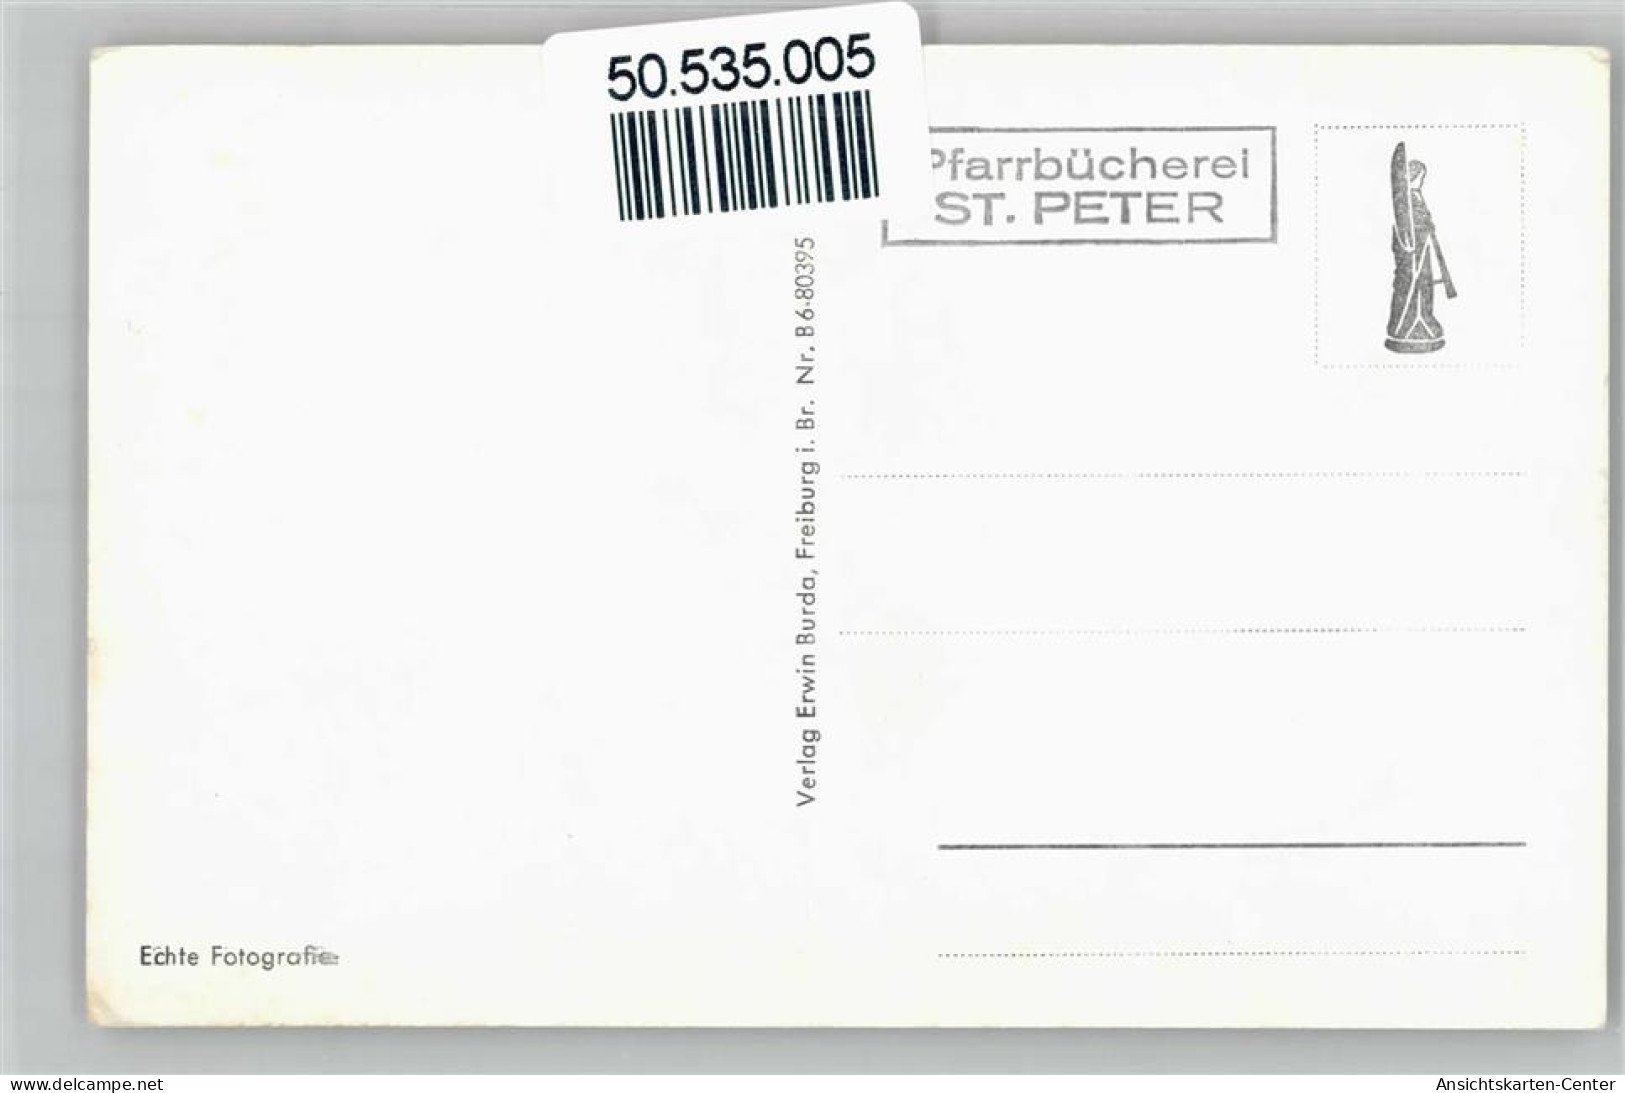 50535005 - St. Peter - St. Peter